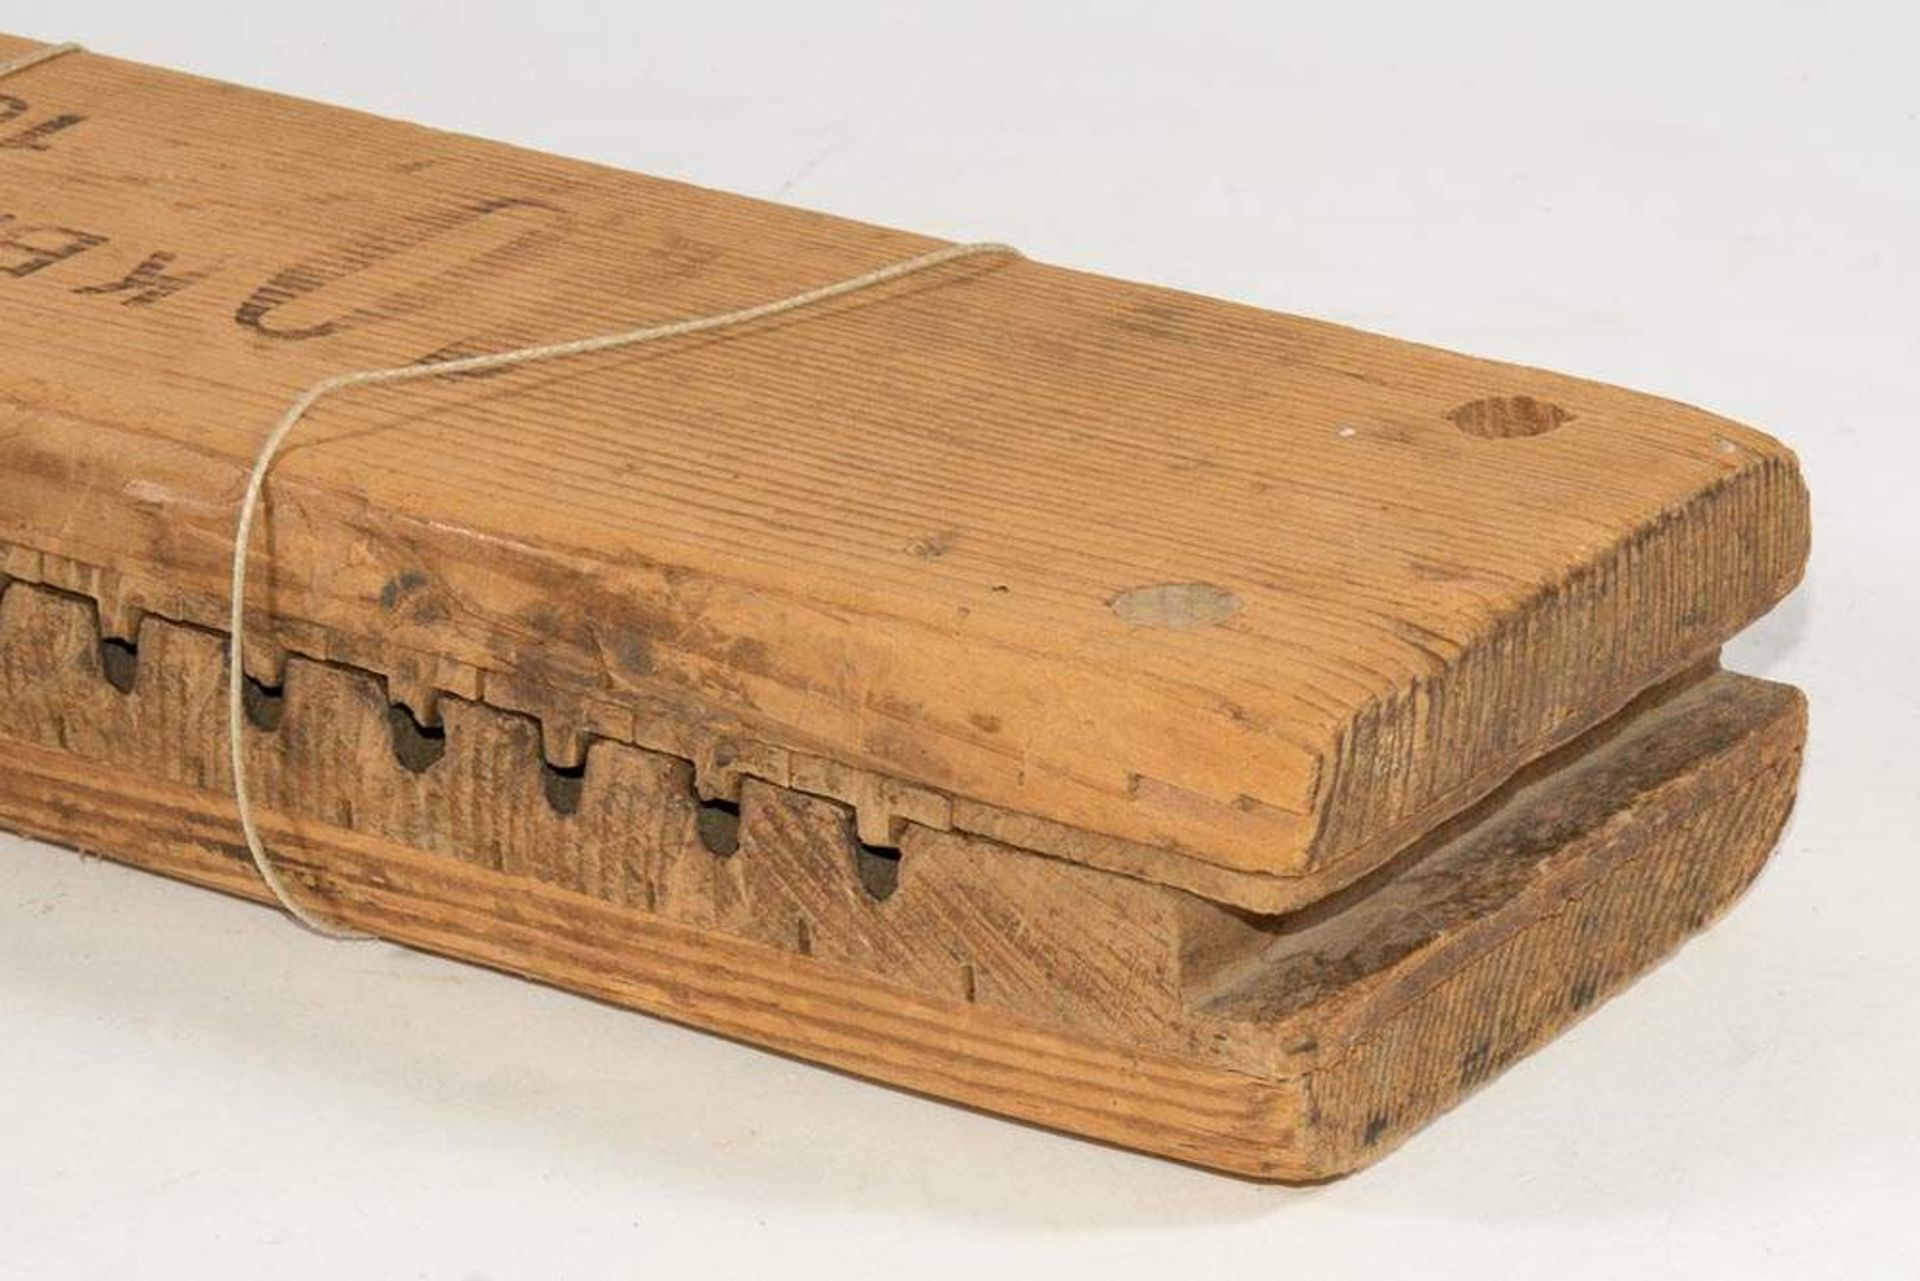 Zigarrenpresse. Holz. Bez. "K. B. & Co. 1930 -  No. 10466". Länge 57 cm. - Image 2 of 5